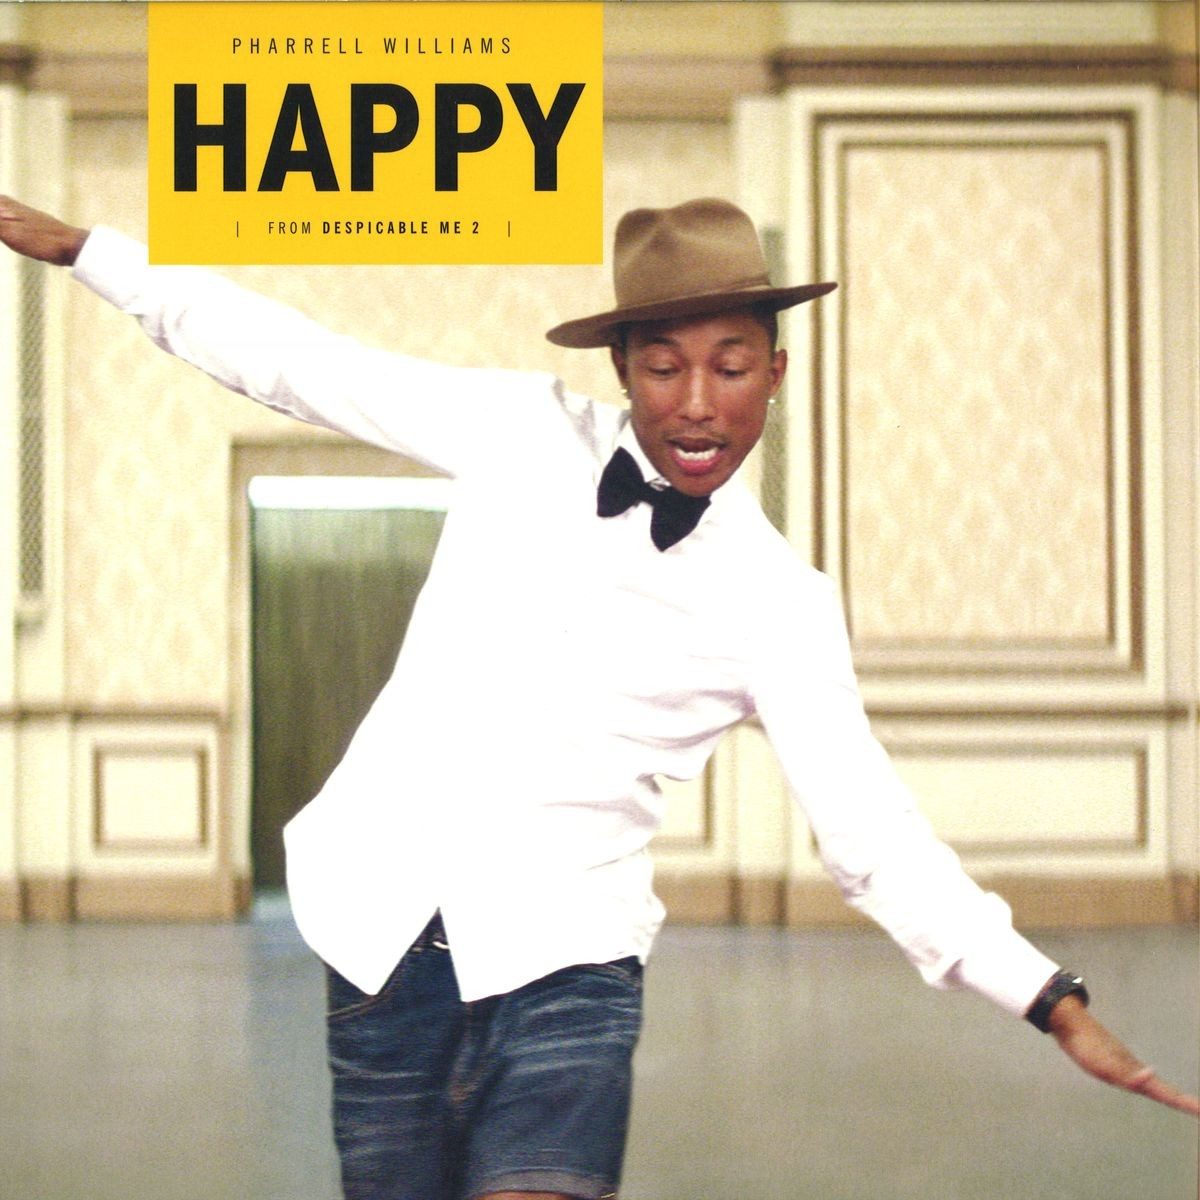 happy pharrell williams